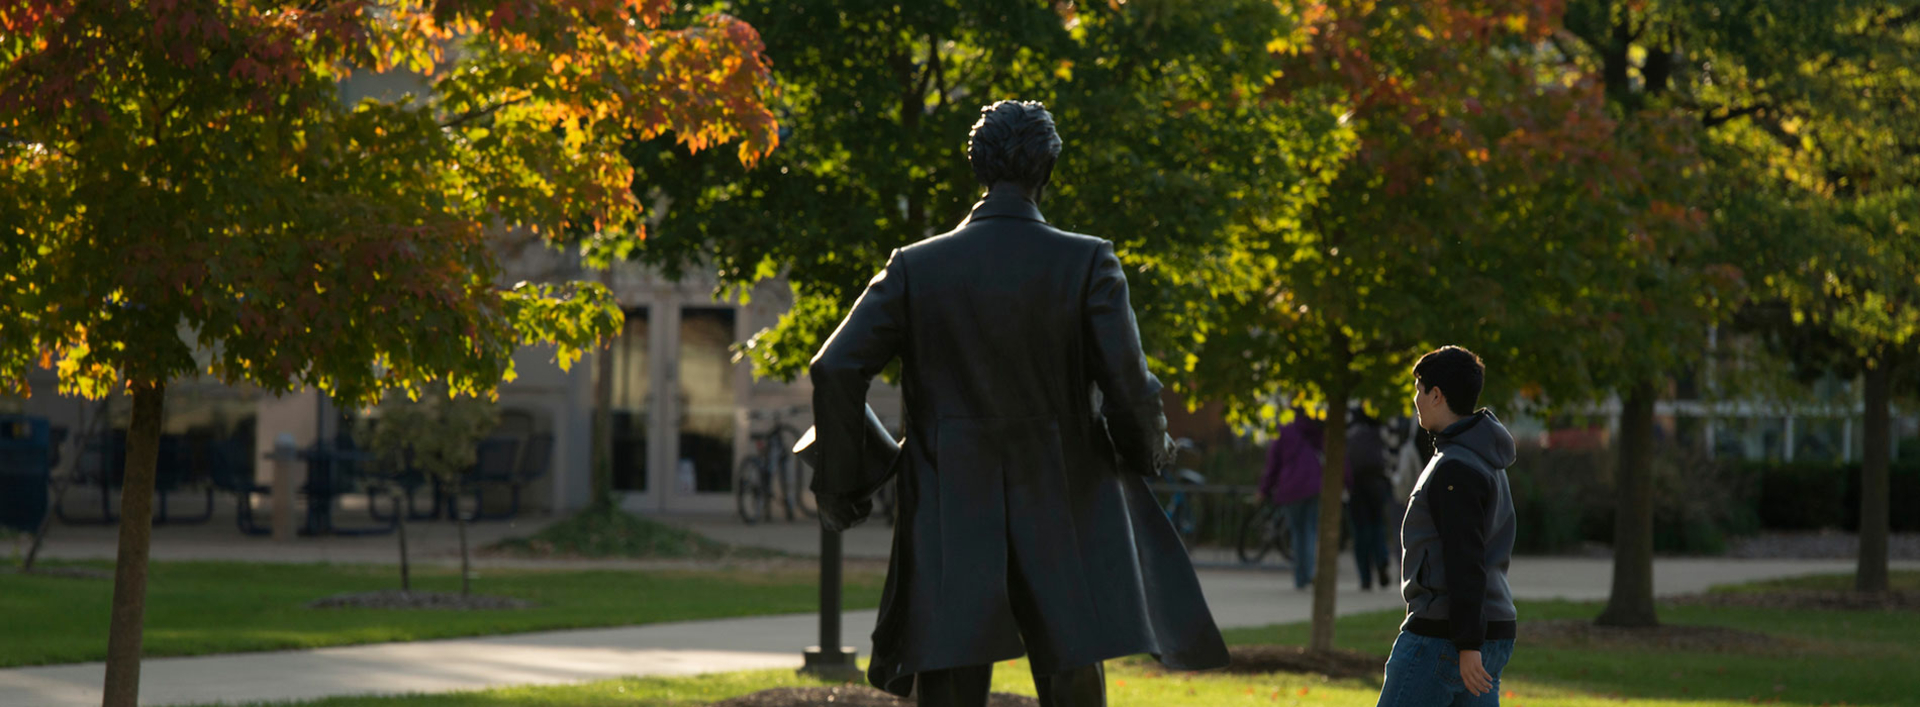 Lincoln statue during fall season